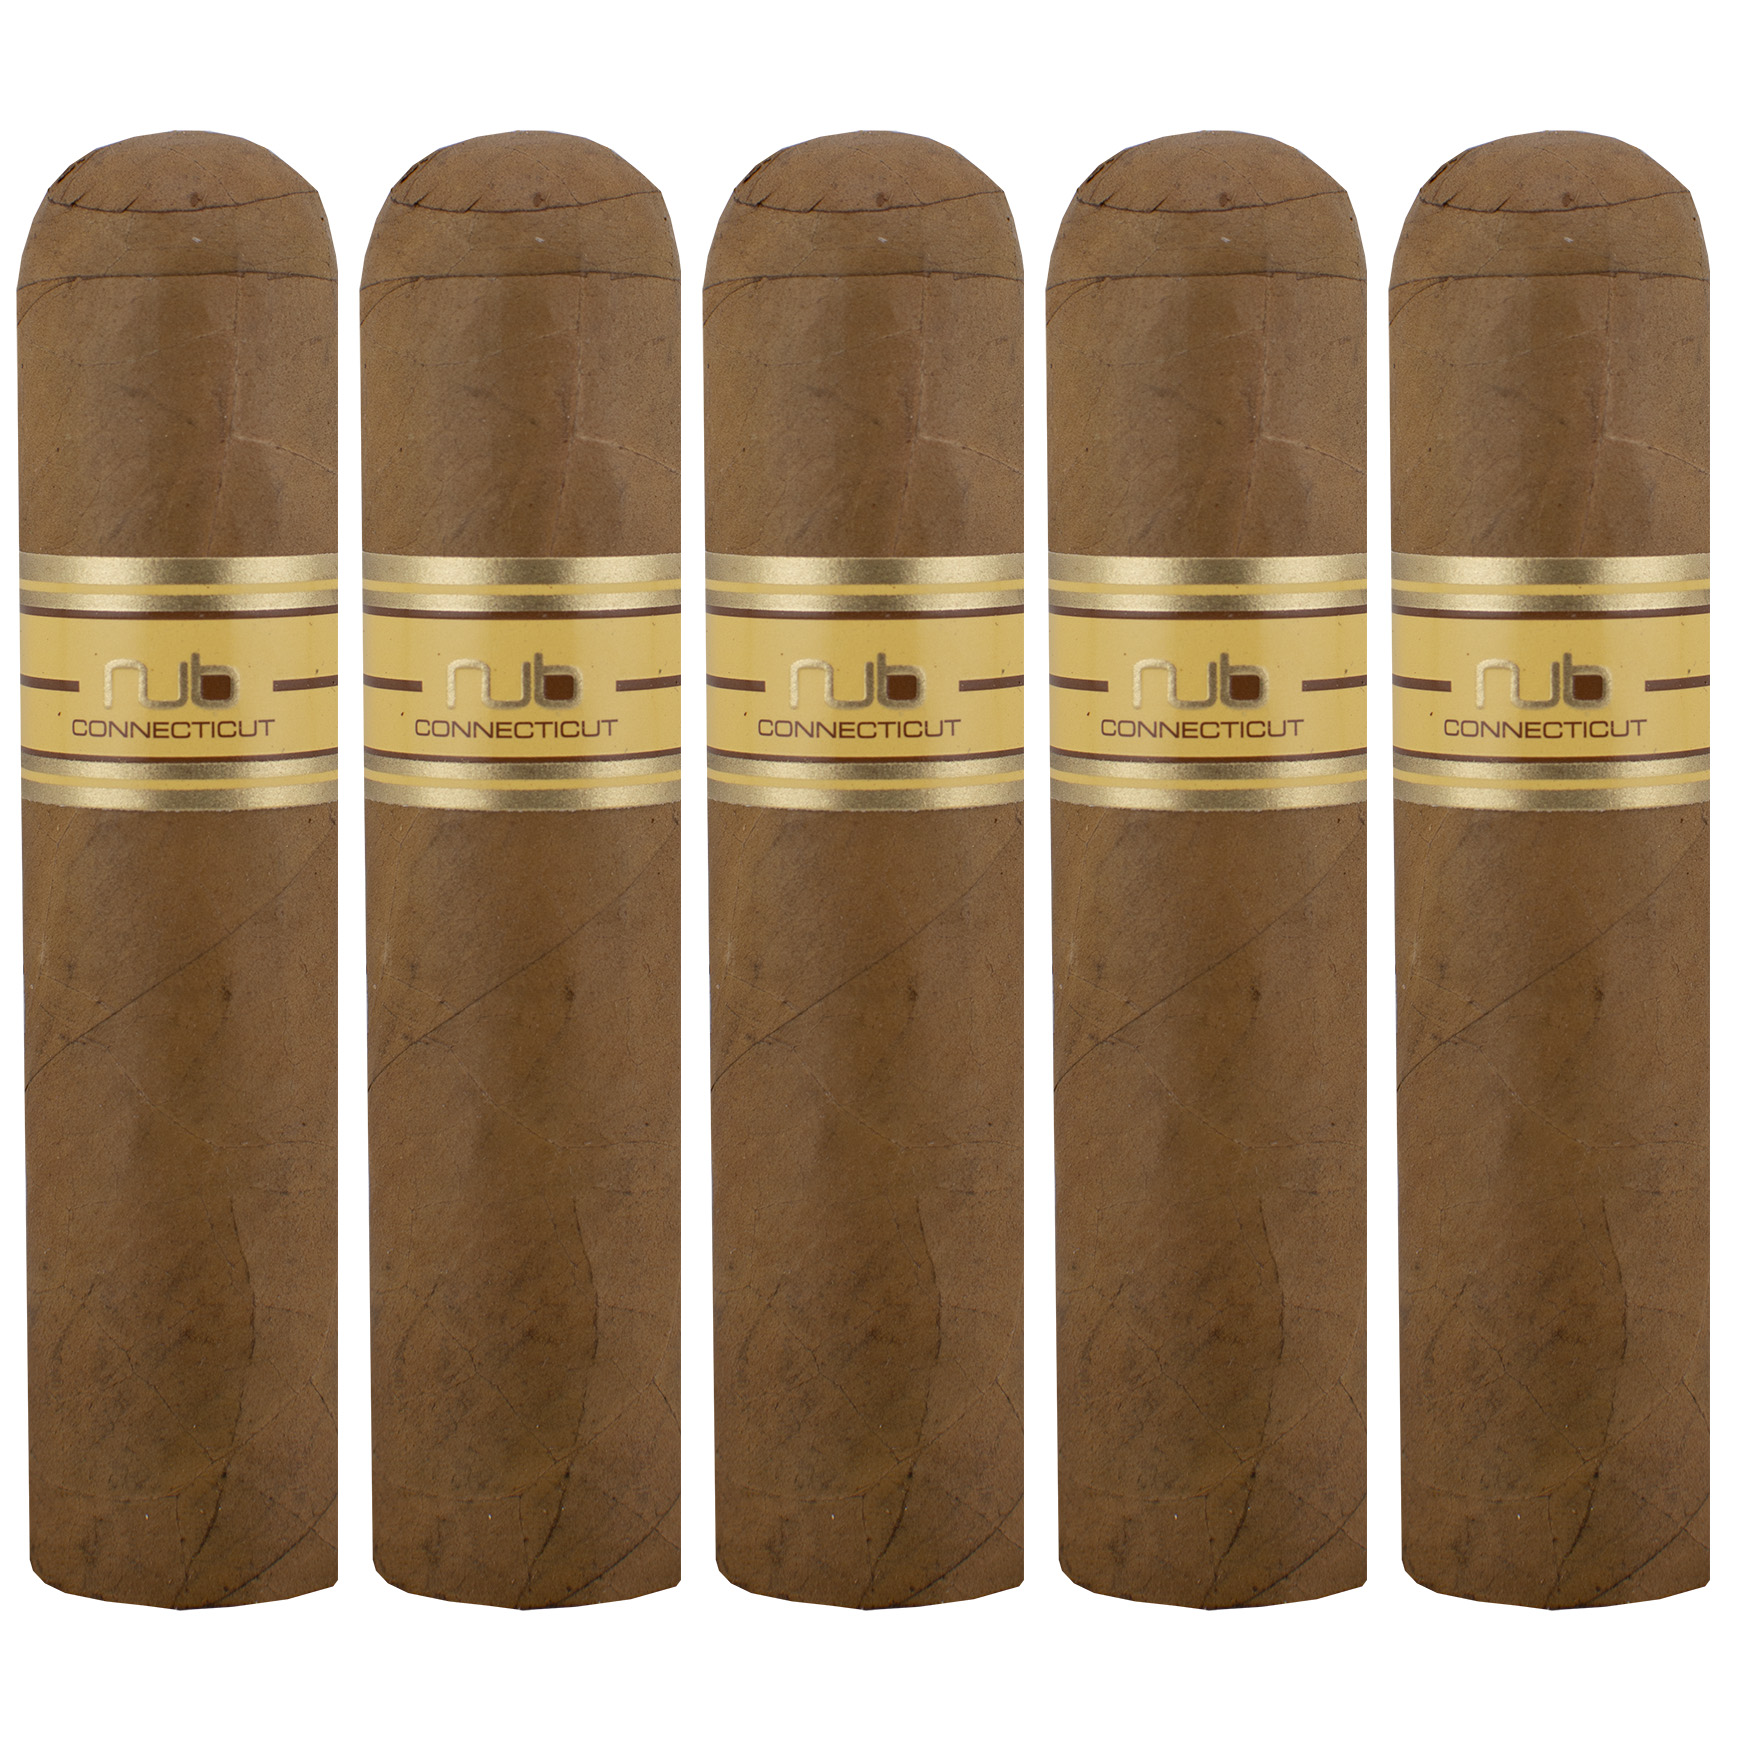 Nub Connecticut 460 Cigar - 5 Pack